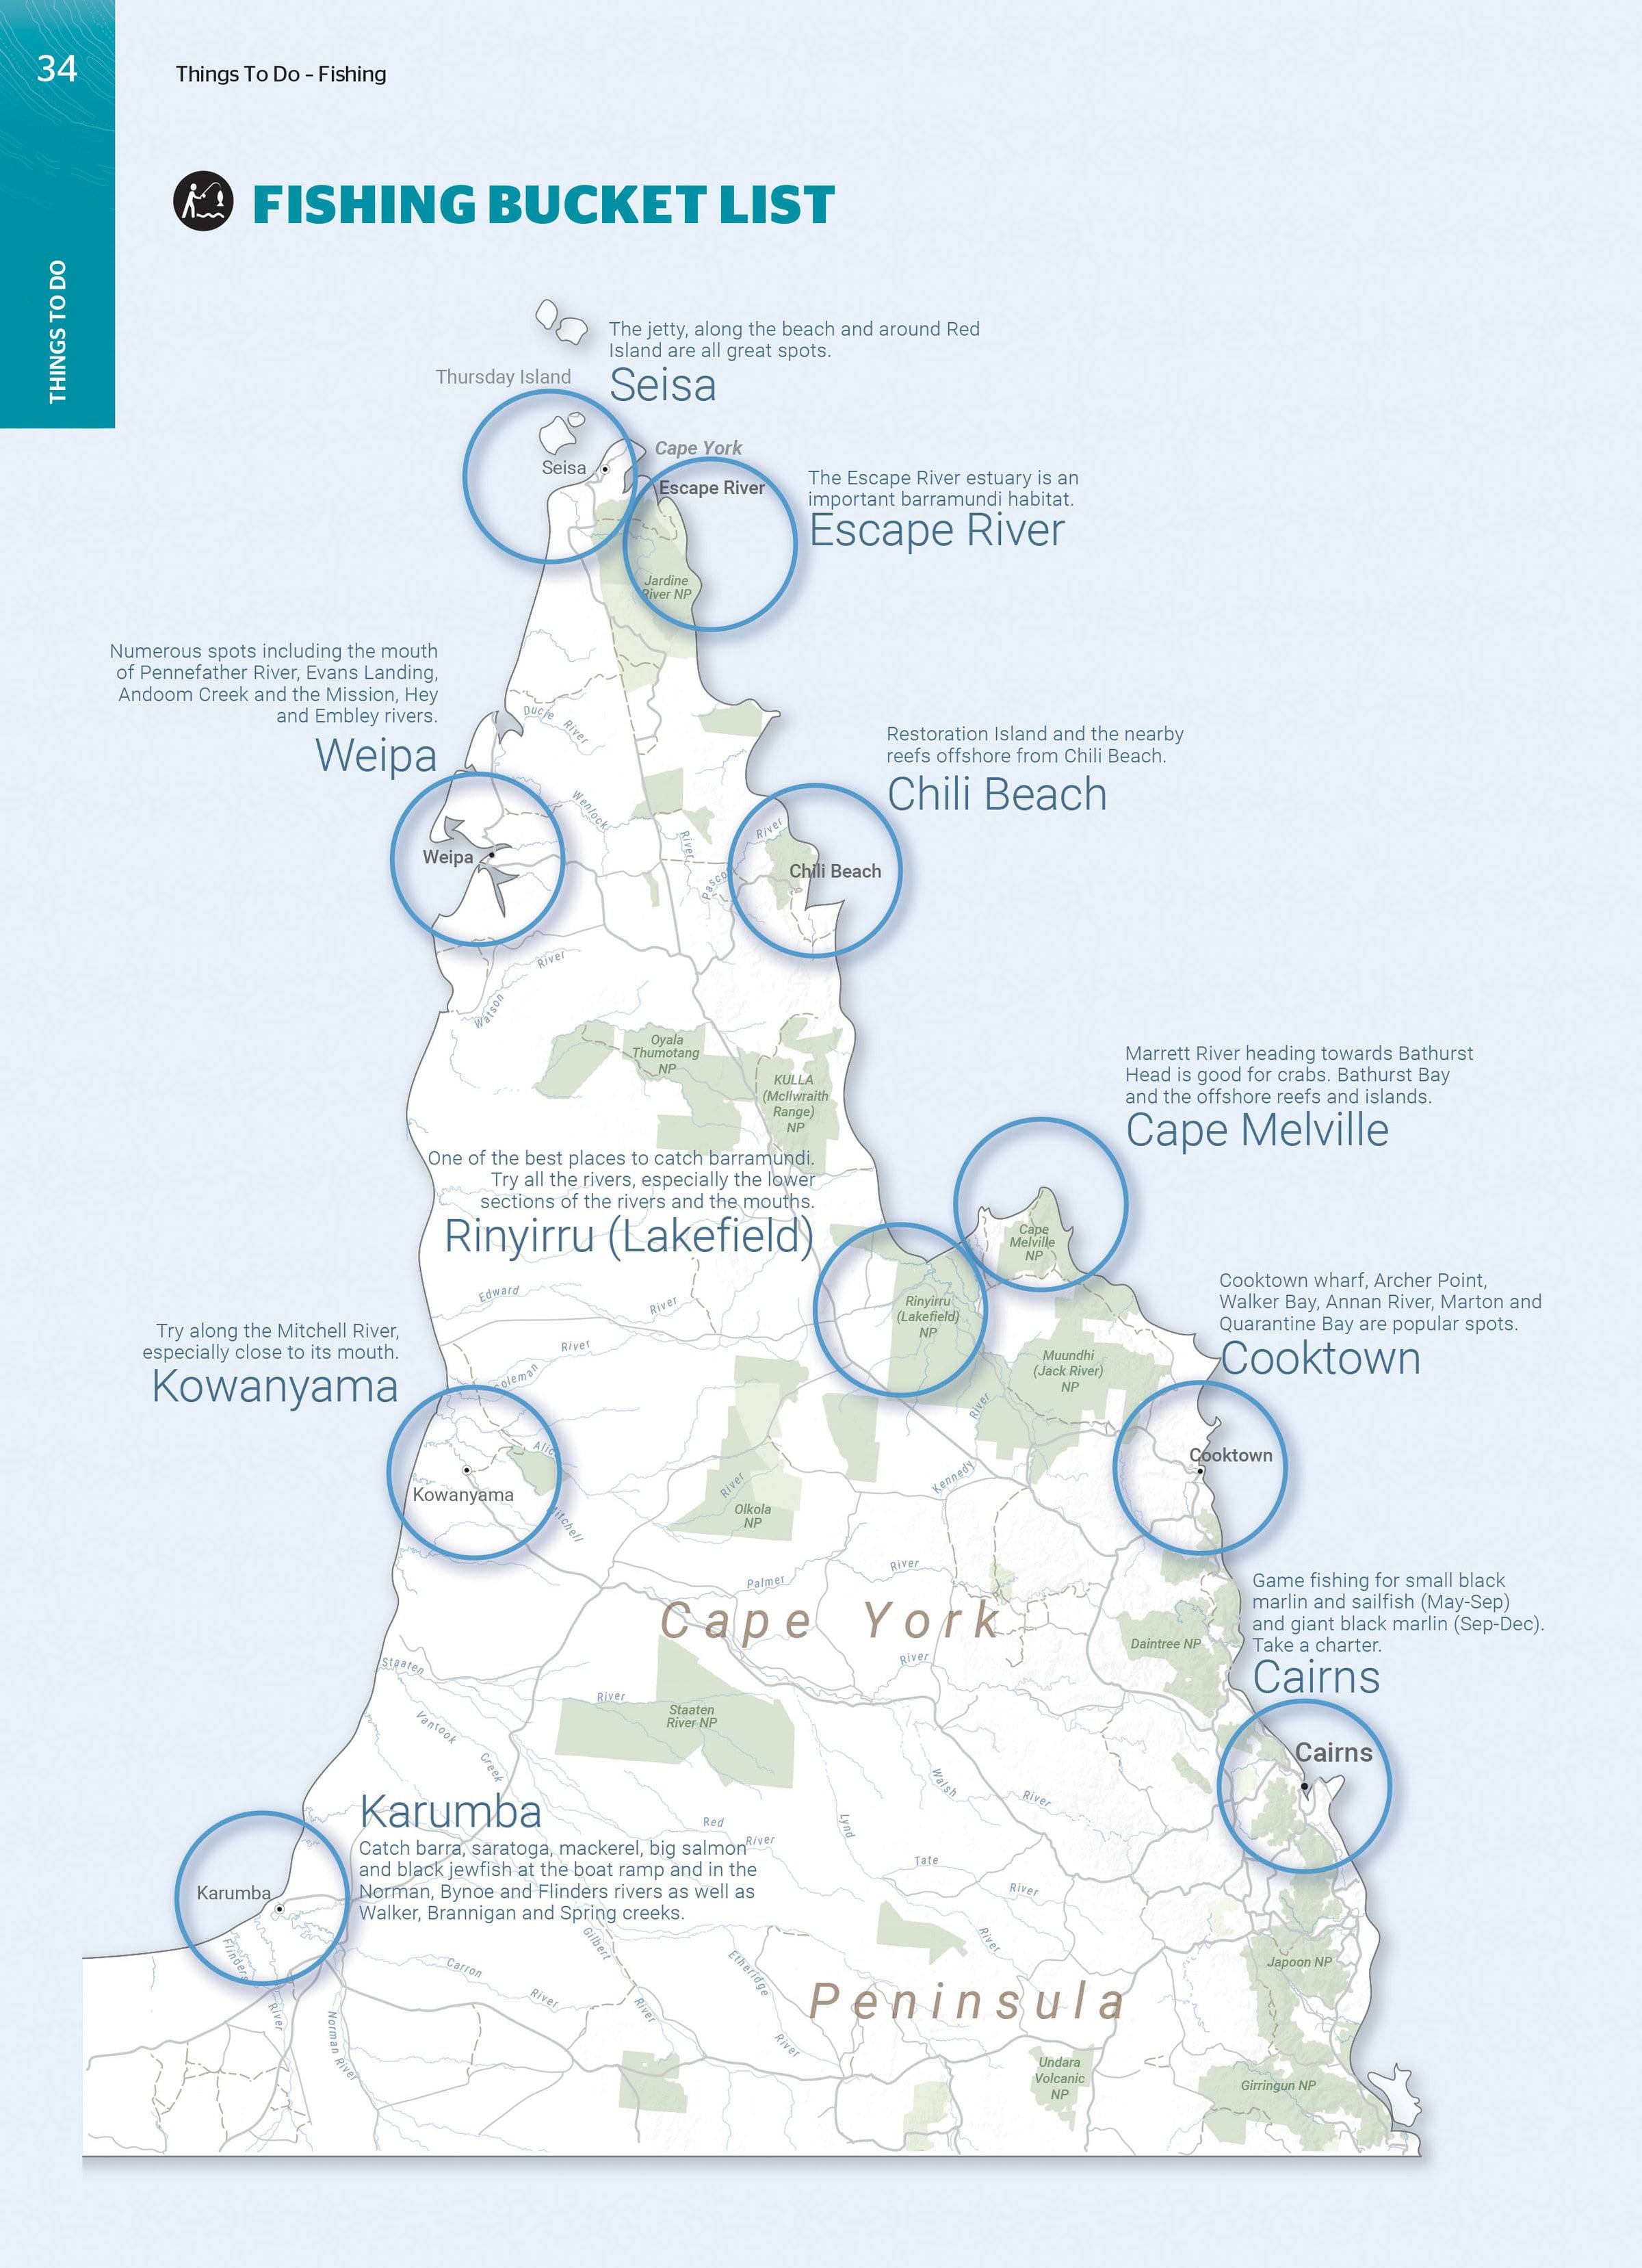 Hema Cape York Atlas & Guide | Hema